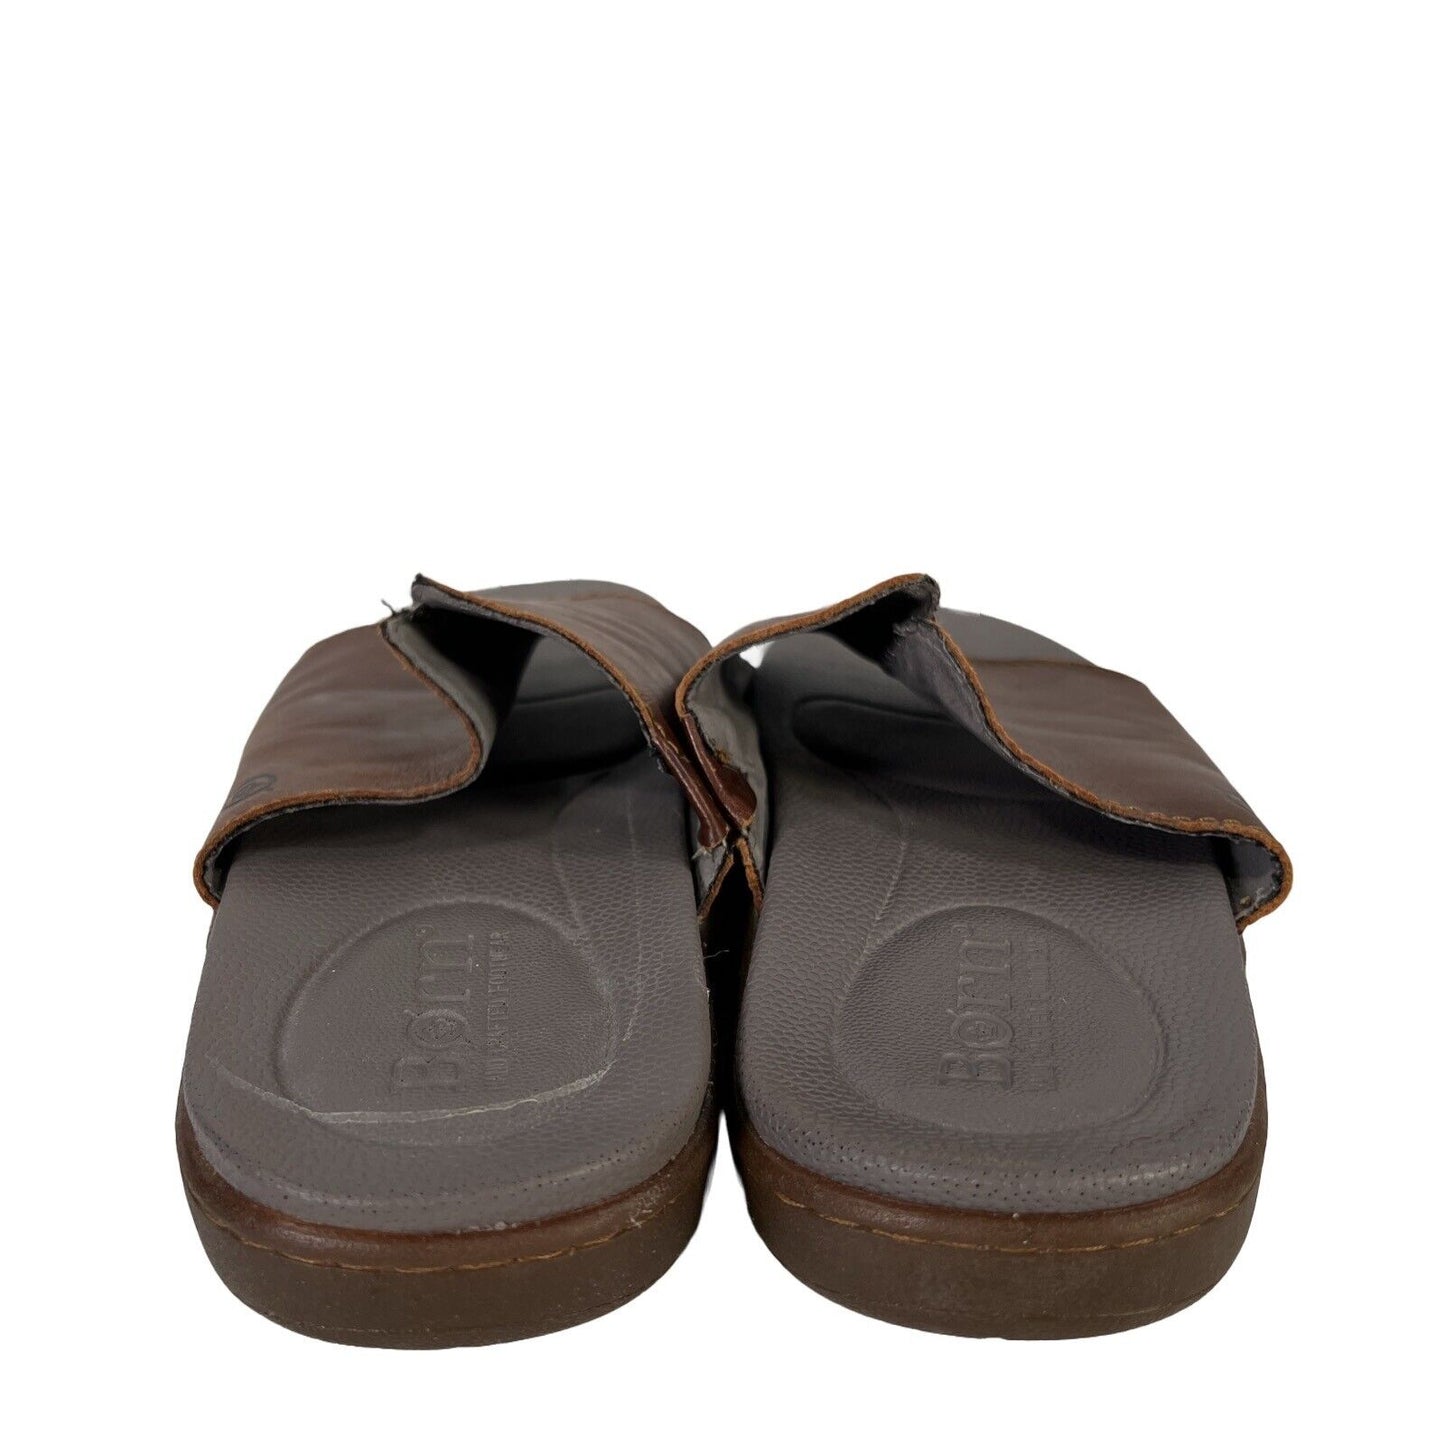 Born Men's Brown Leather Slip on Slide Sandals - 9